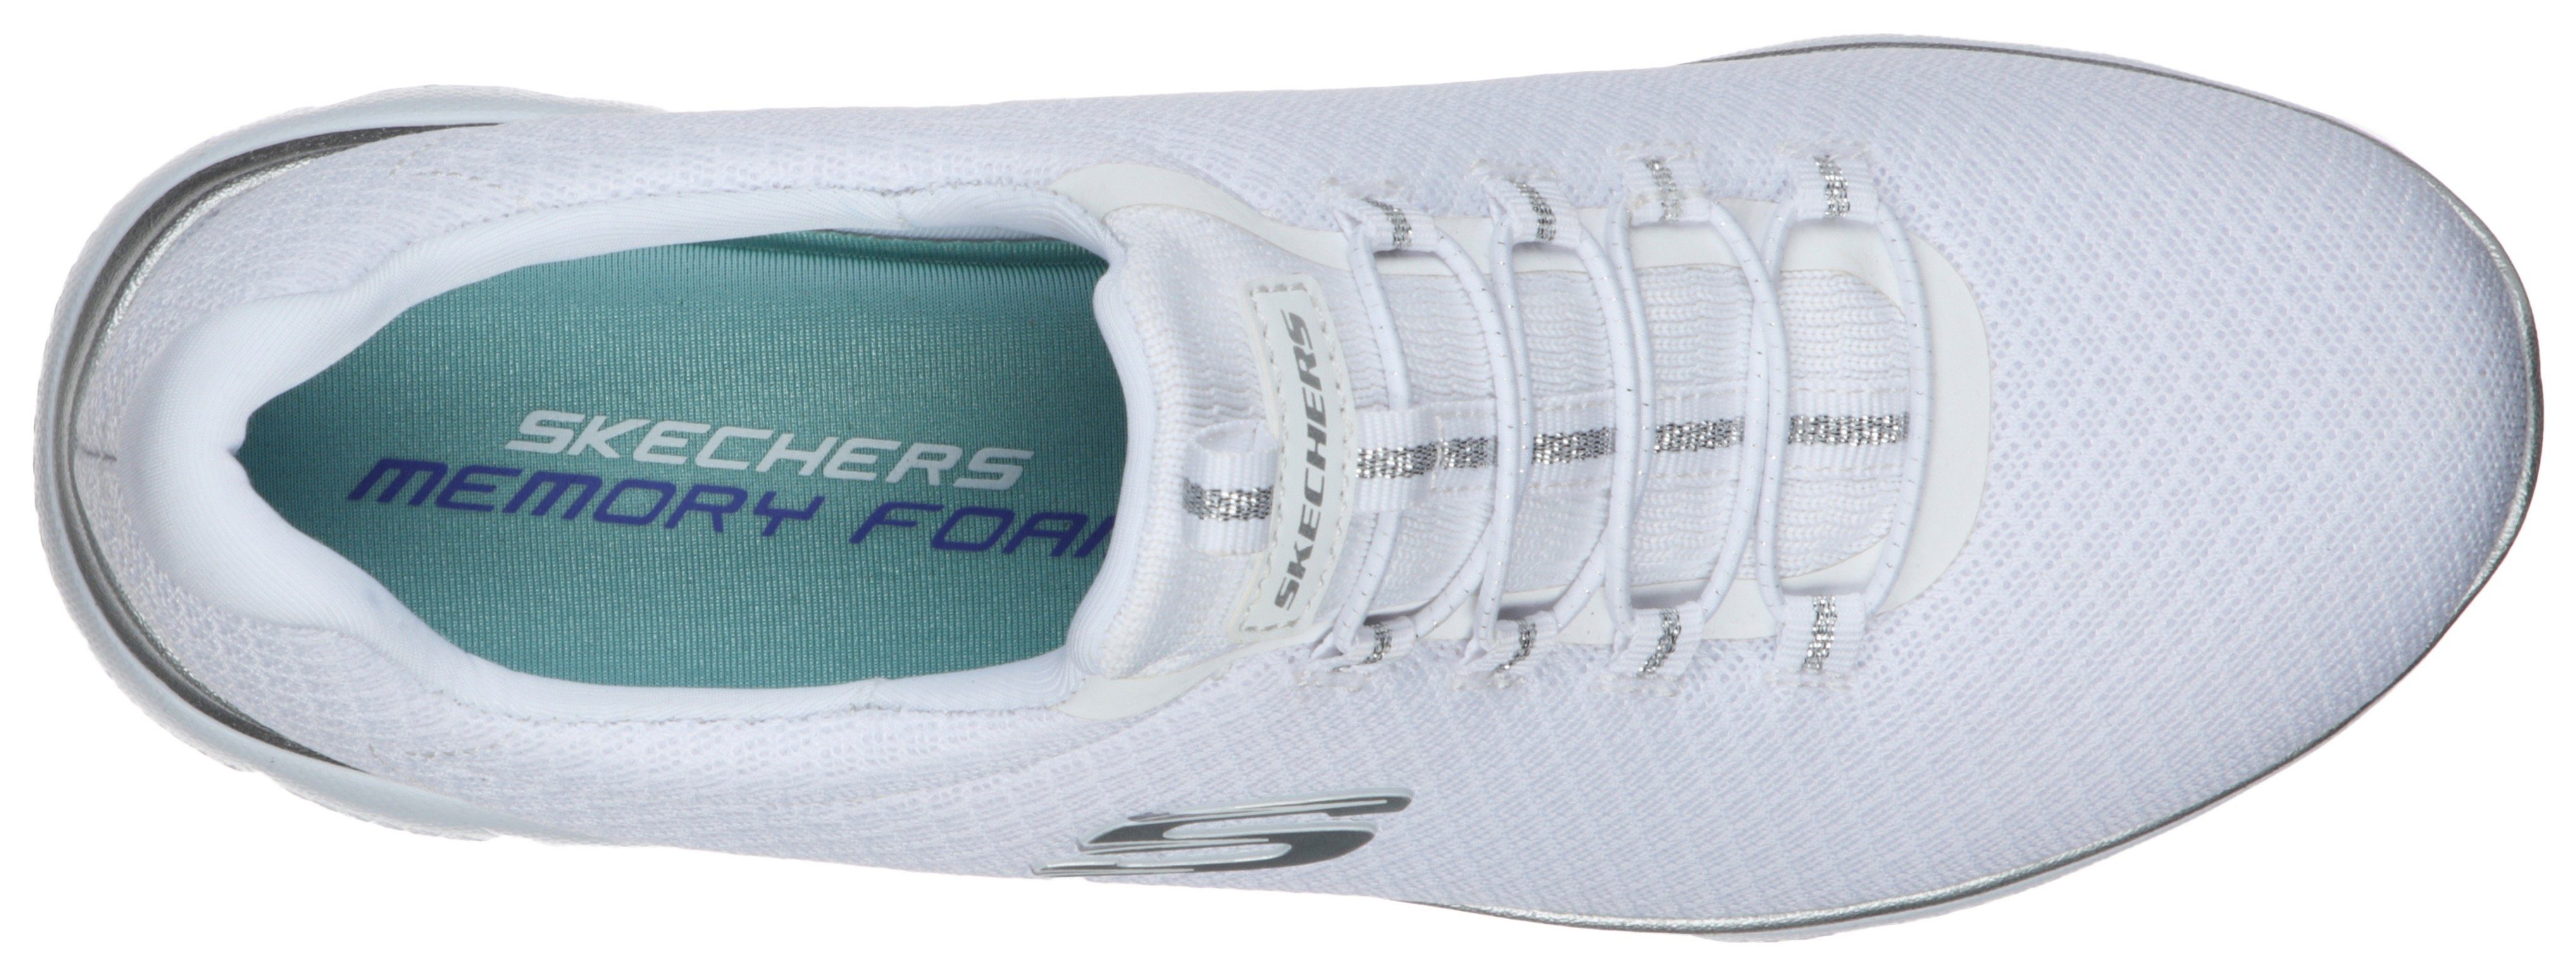 Skechers SUMMITS Slip-On mit weiß-silberfarben Kontrast-Details dezenten Sneaker